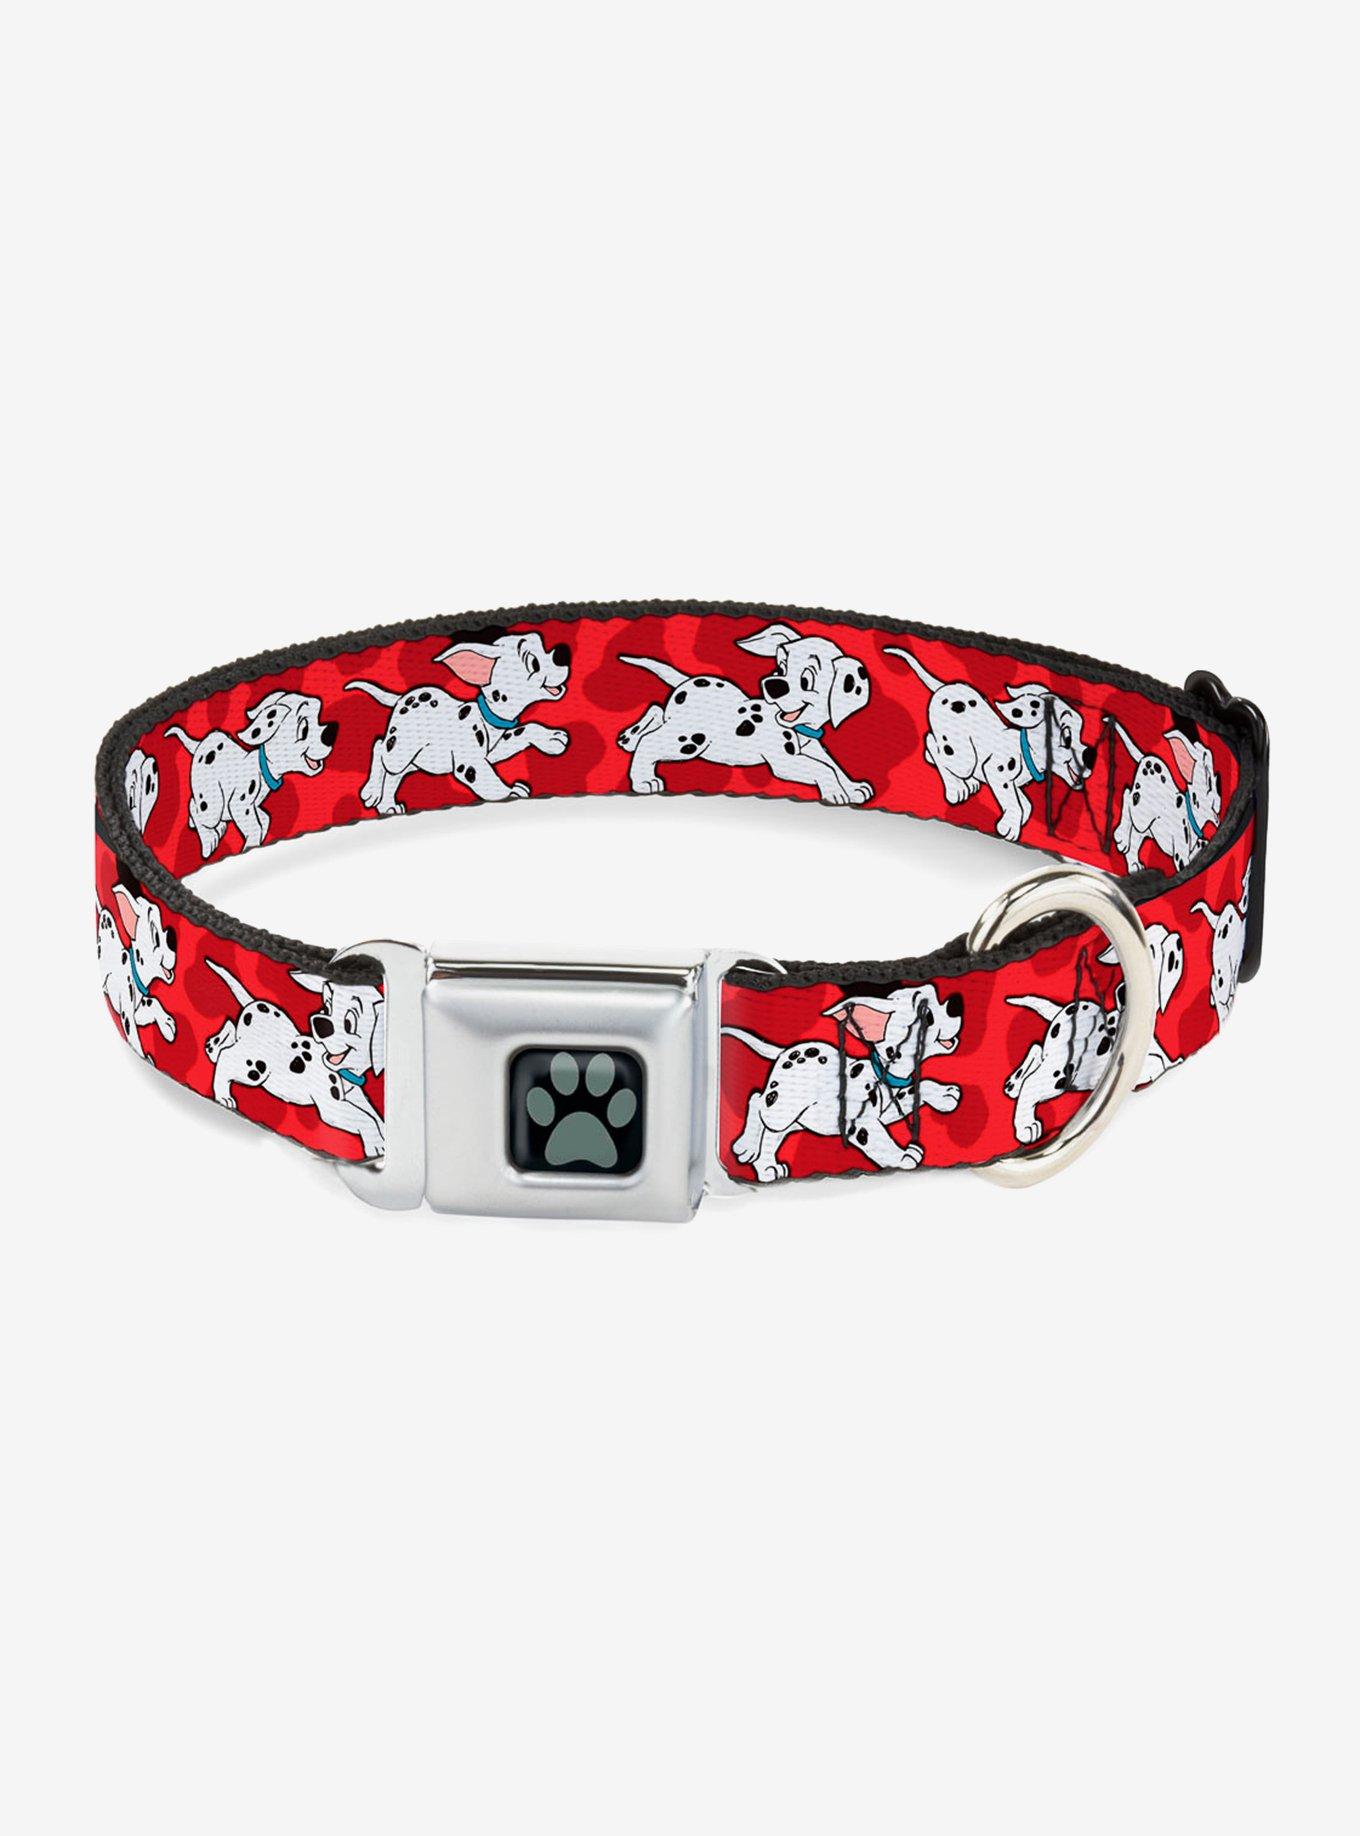 Disney 101 Dalmatians Running Paws Reds White Black Seatbelt Buckle Pet Collar, RED, hi-res